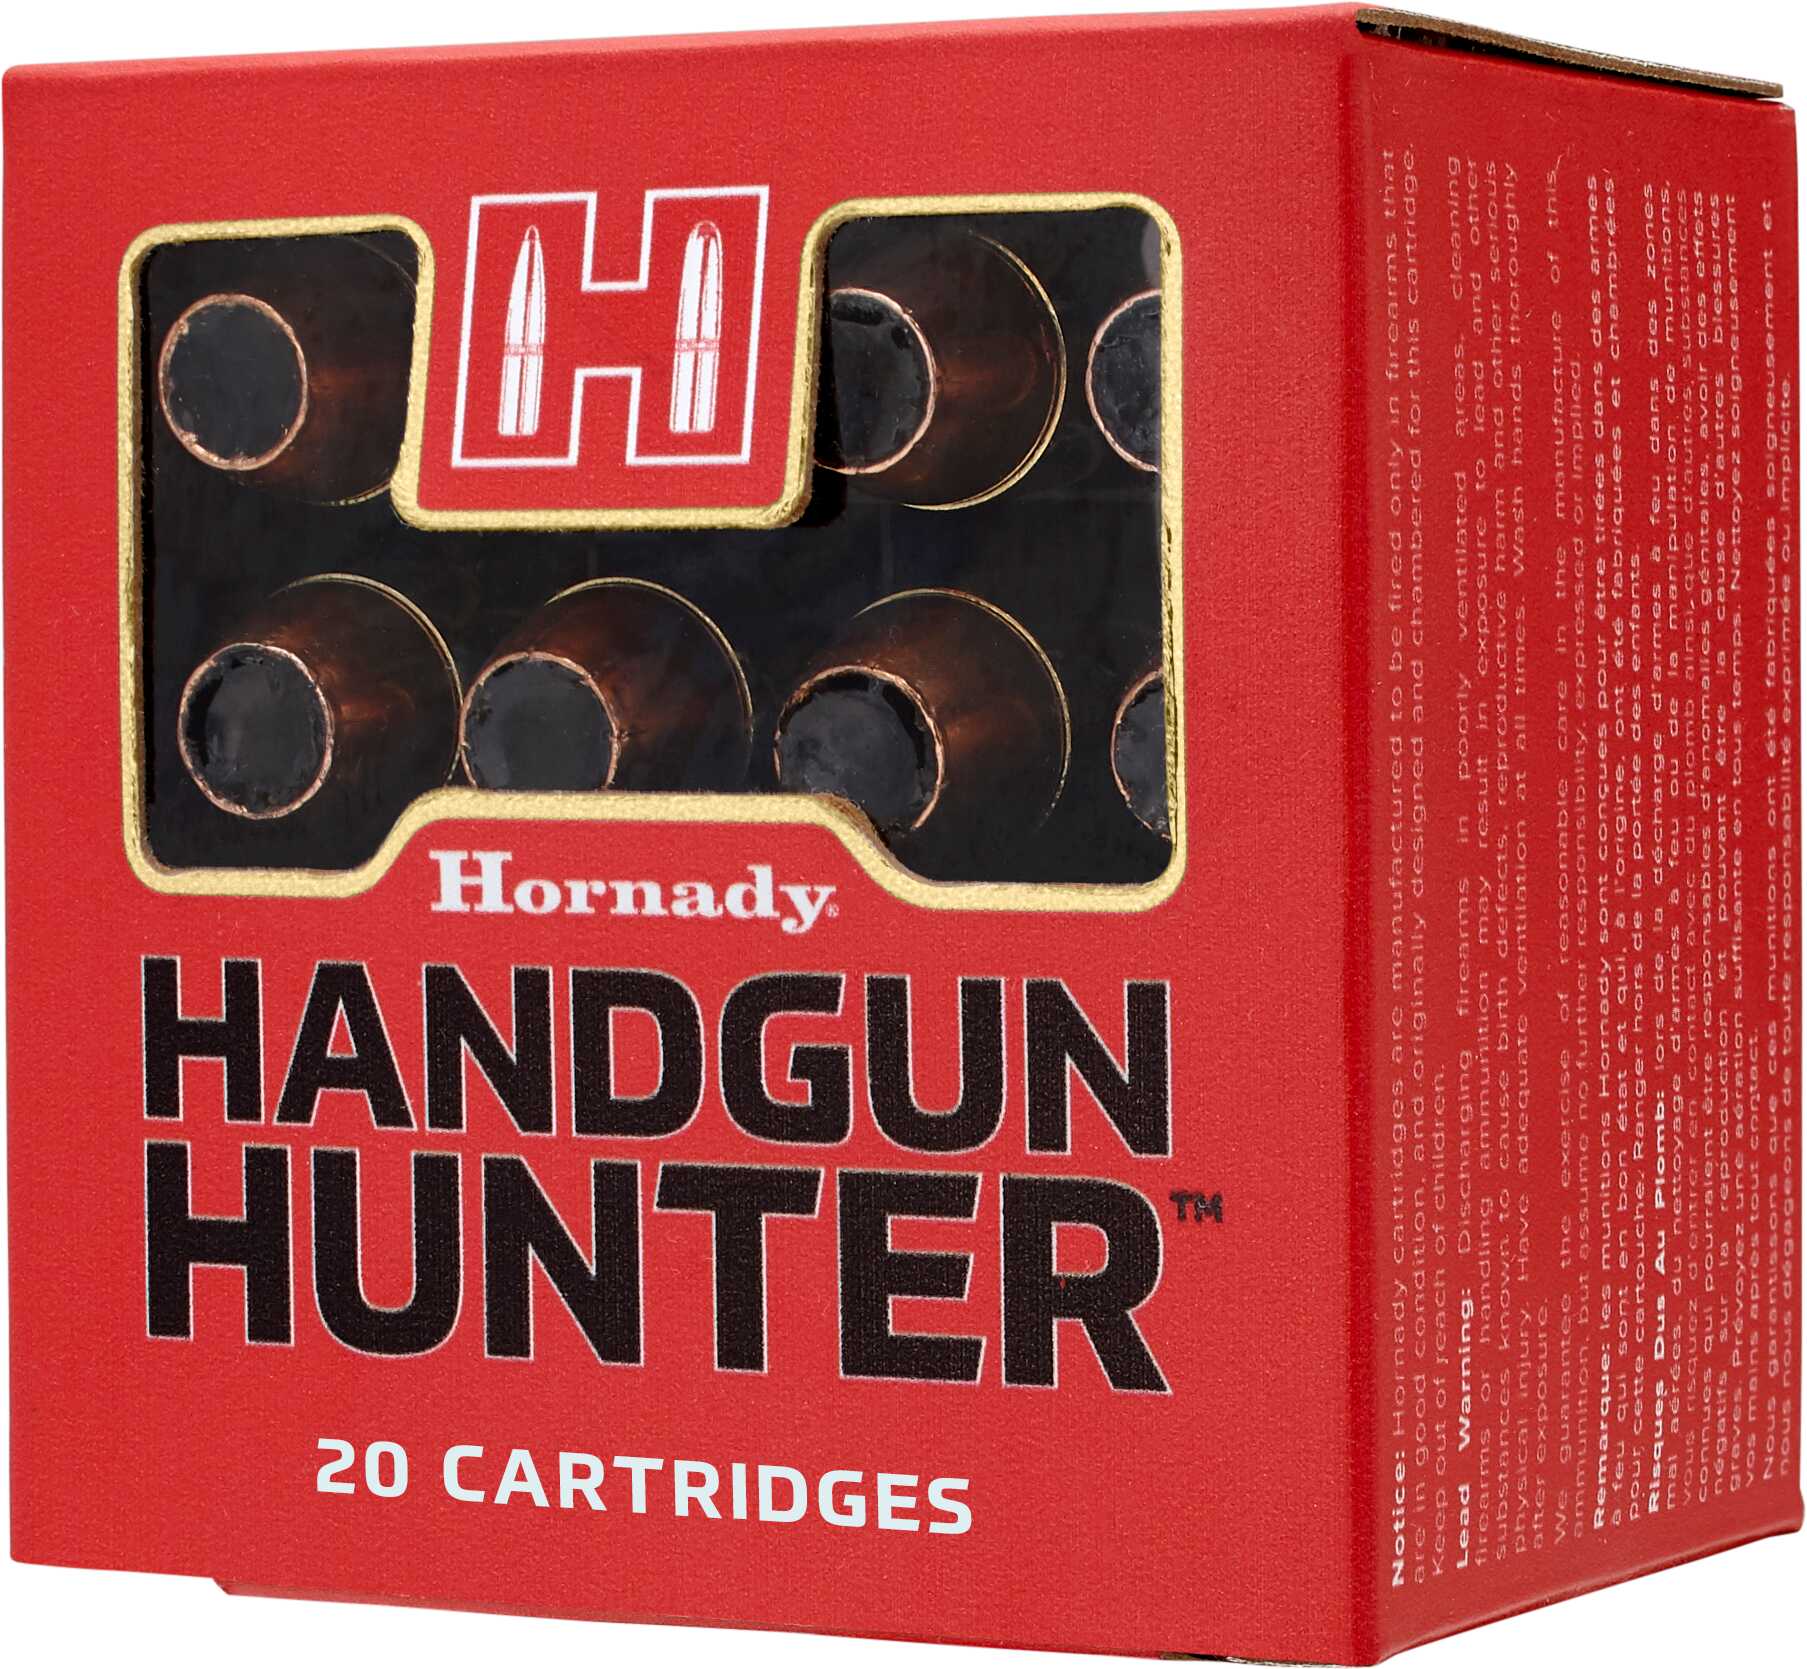 9mm Luger +P 25 Rounds Ammunition Hornady 115 Grain Hollow Point